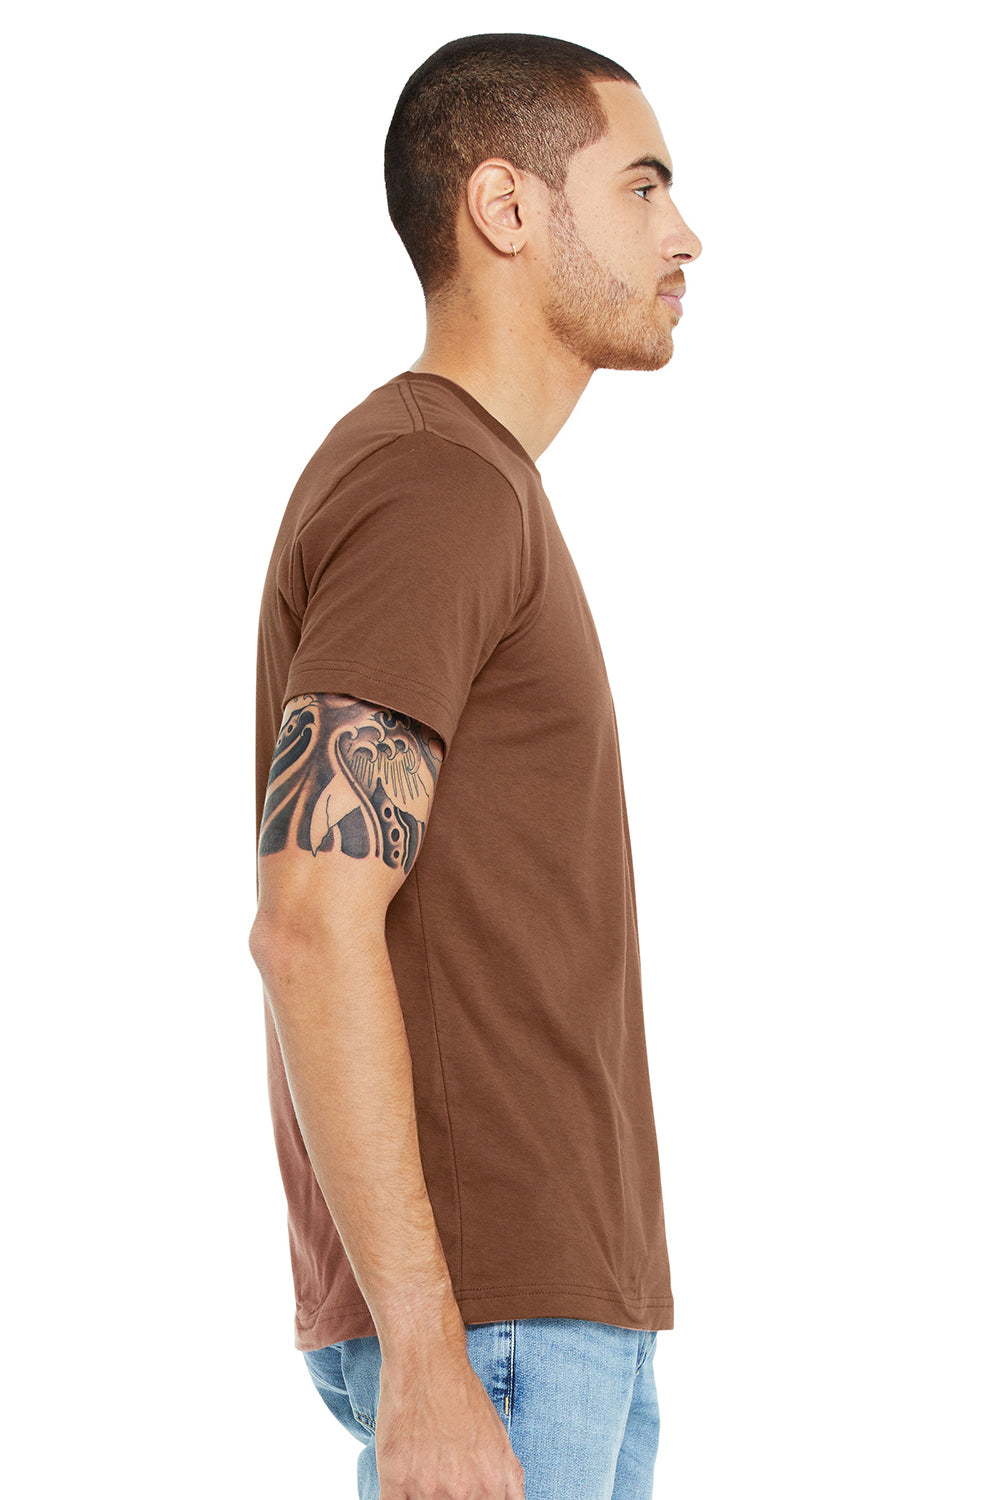 Bella + Canvas BC3001/3001C Mens Jersey Short Sleeve Crewneck T-Shirt Chestnut Brown Model Side